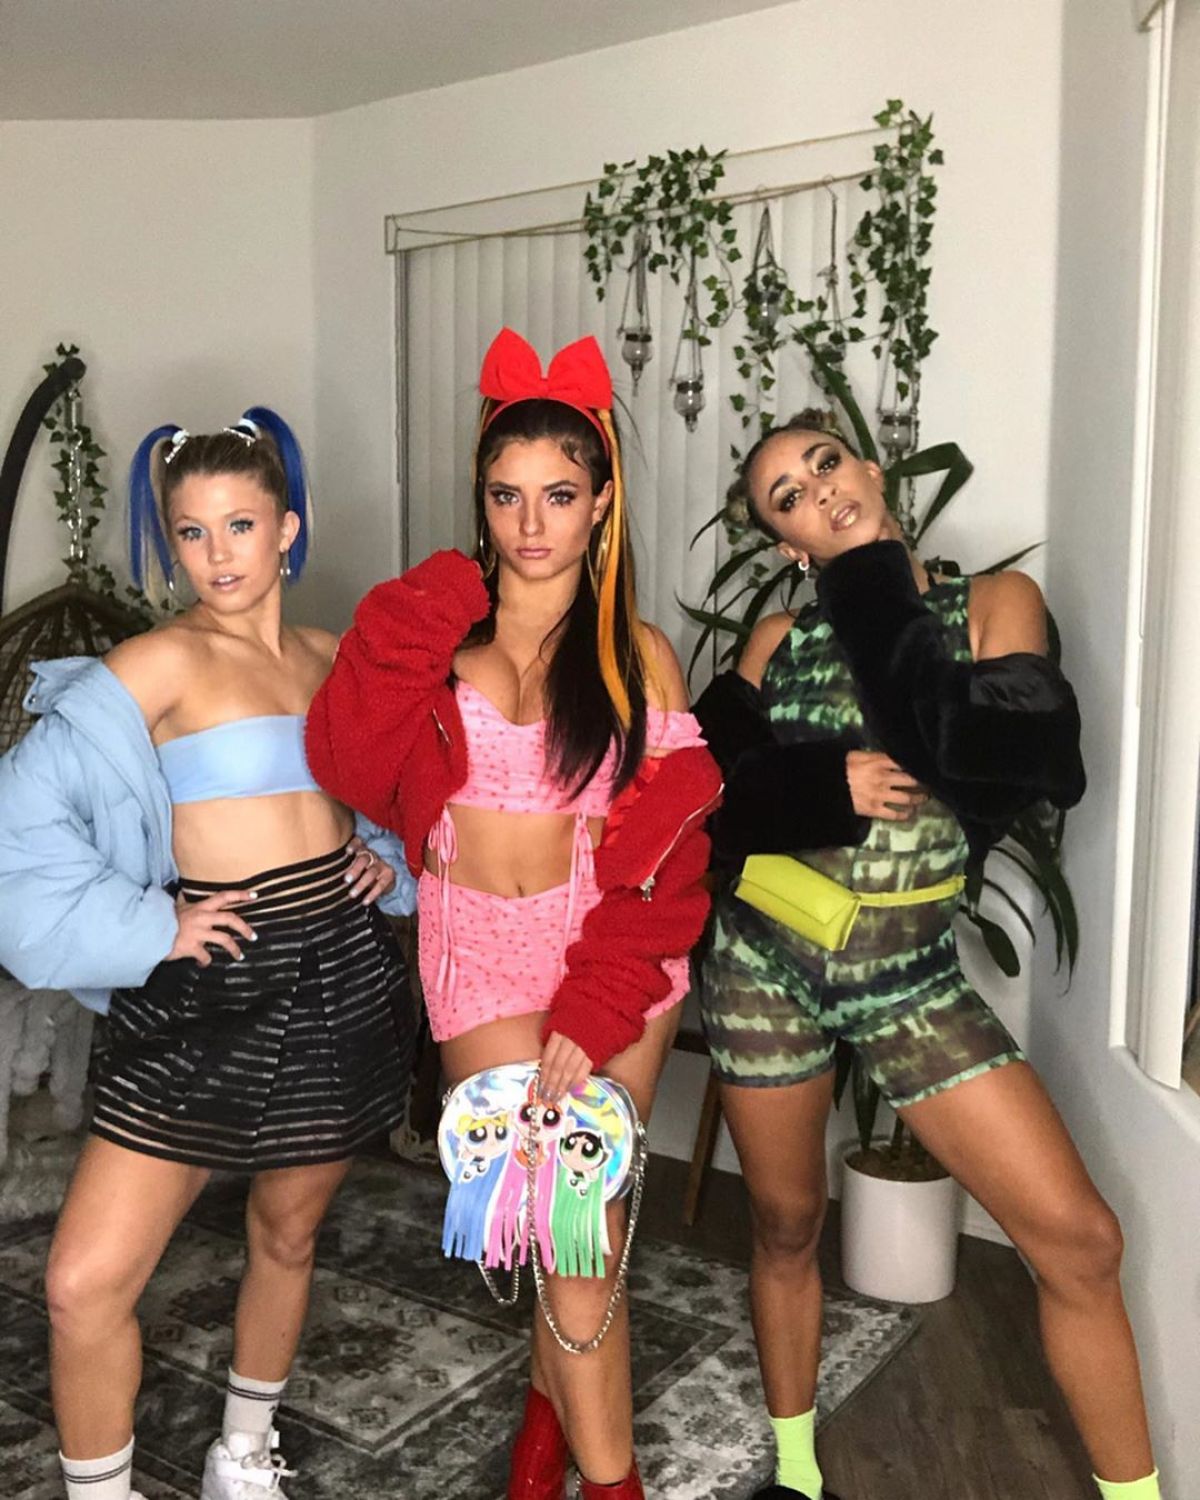 JADE CHYNOWETH at Halloween Party – Instagram Photos 10/31/2019 ...